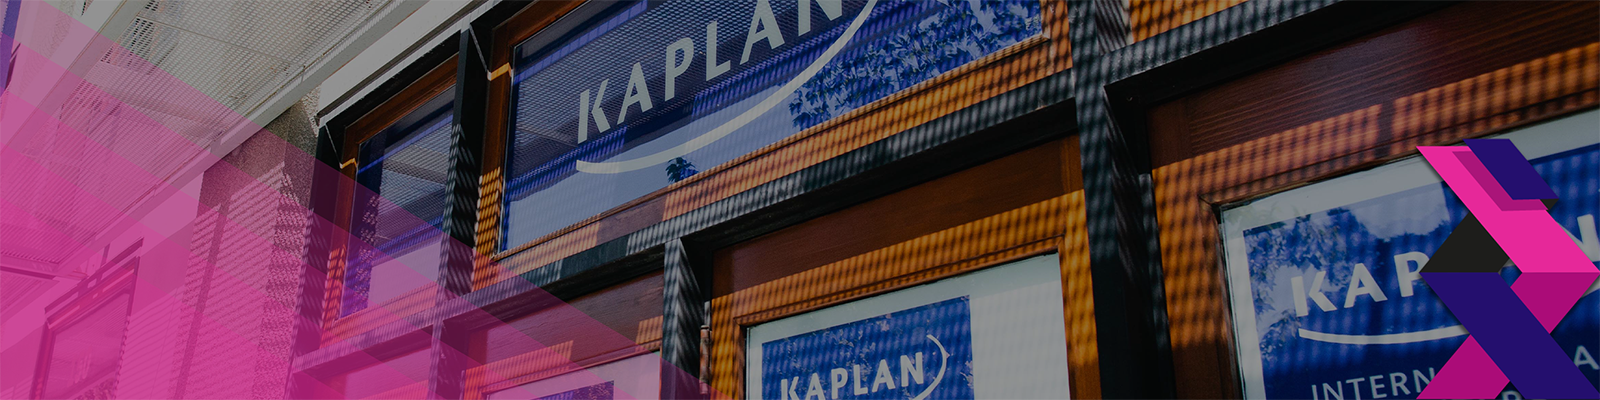 Kaplan International Languages - Liverpool görseli